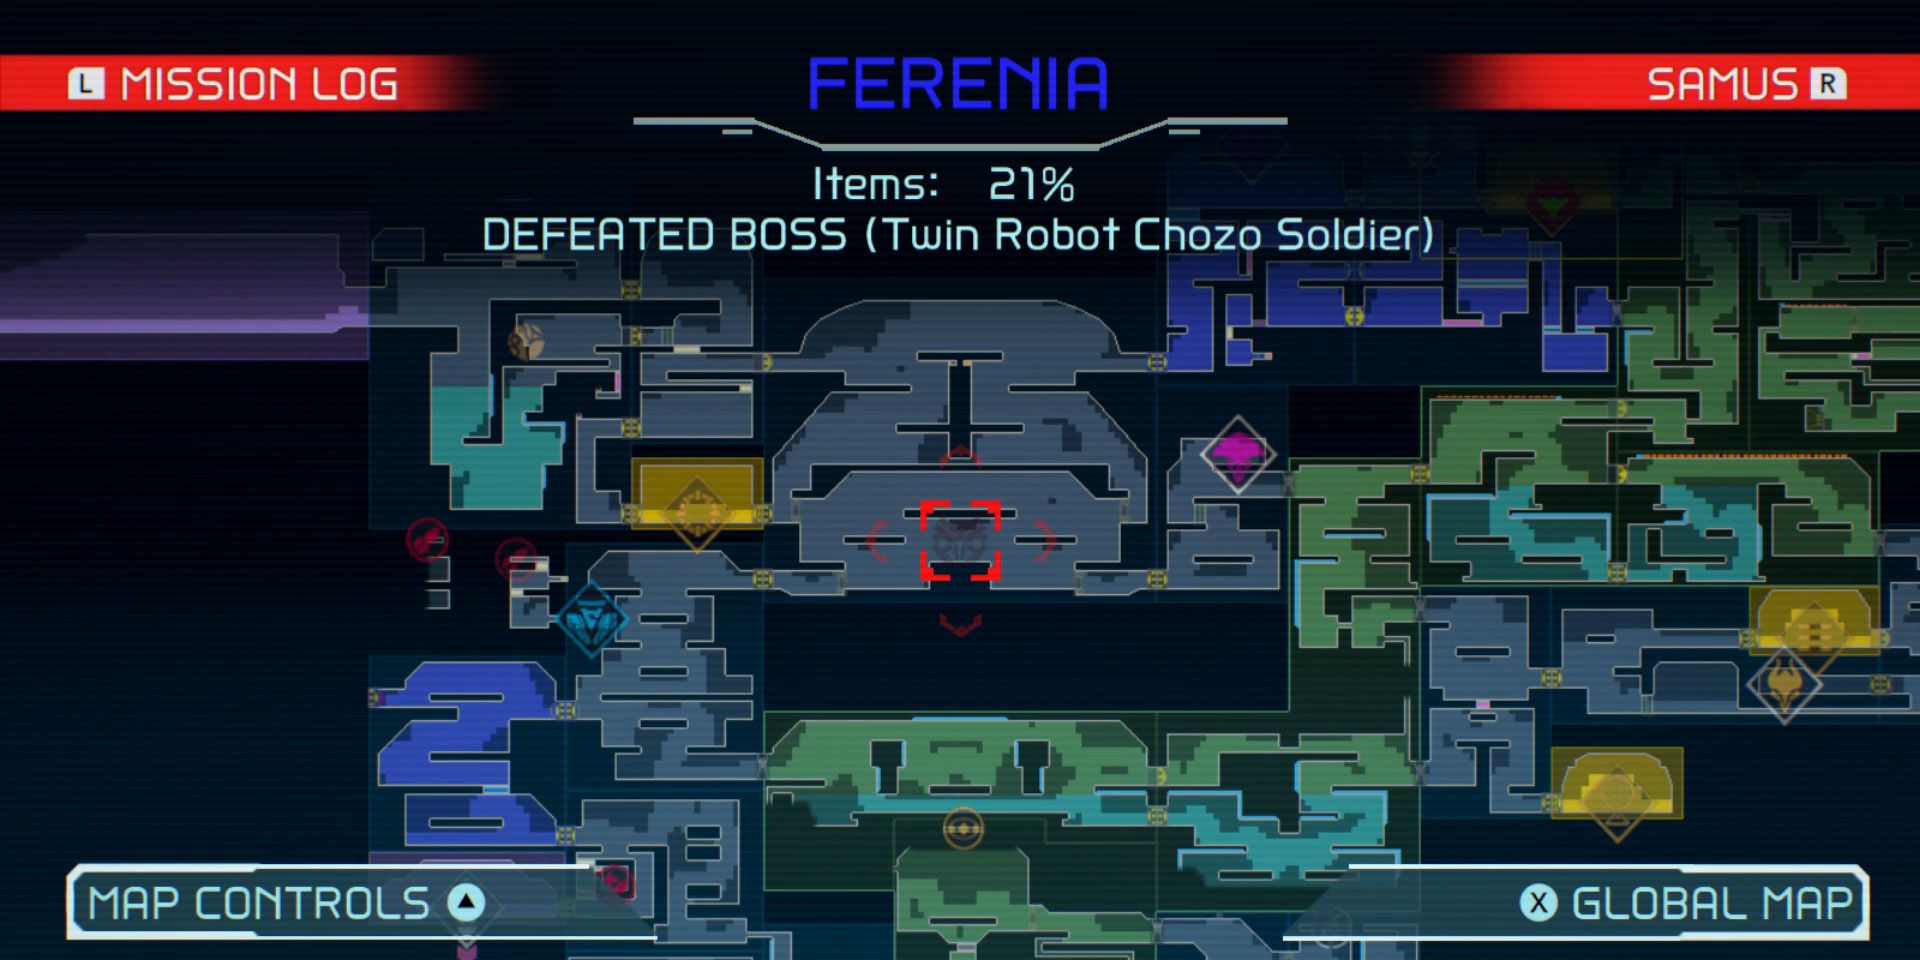 metroid-dread-twin-robot-chozo-soldier-boss-fight-01-ferenia-map